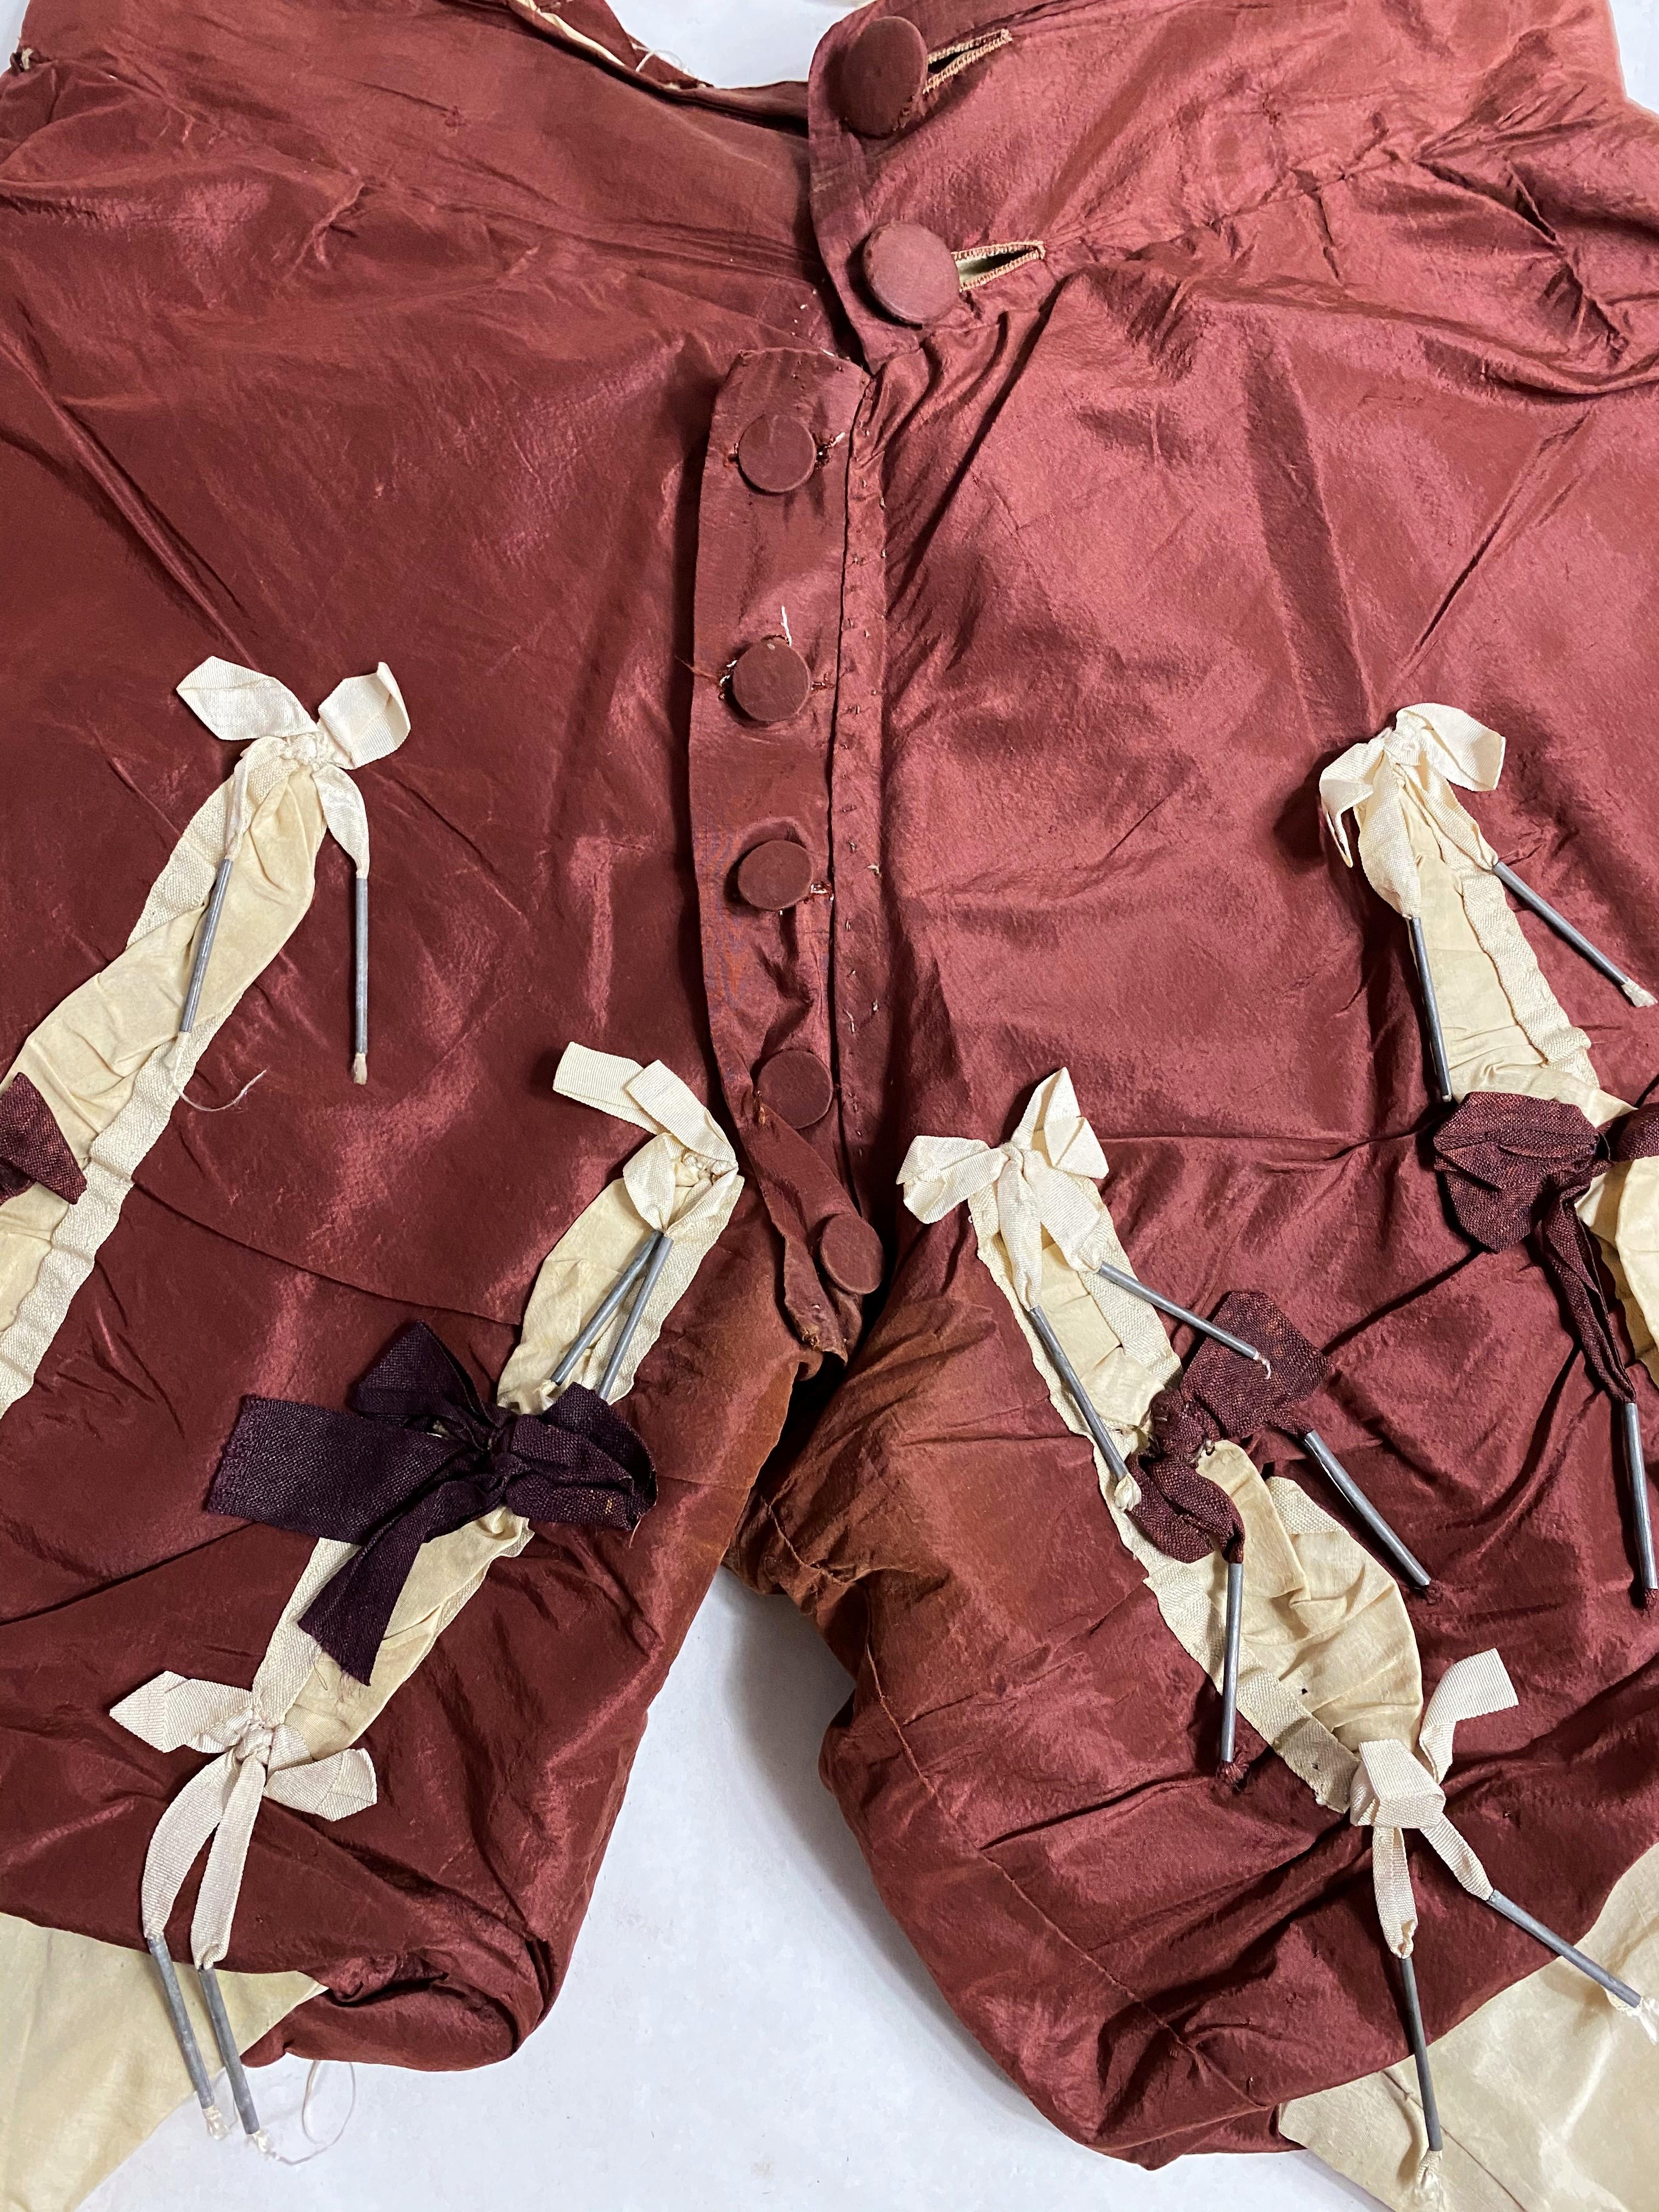 Gray A Rare Jockey (?) Silk jumpsuit and breeches - England 18th century